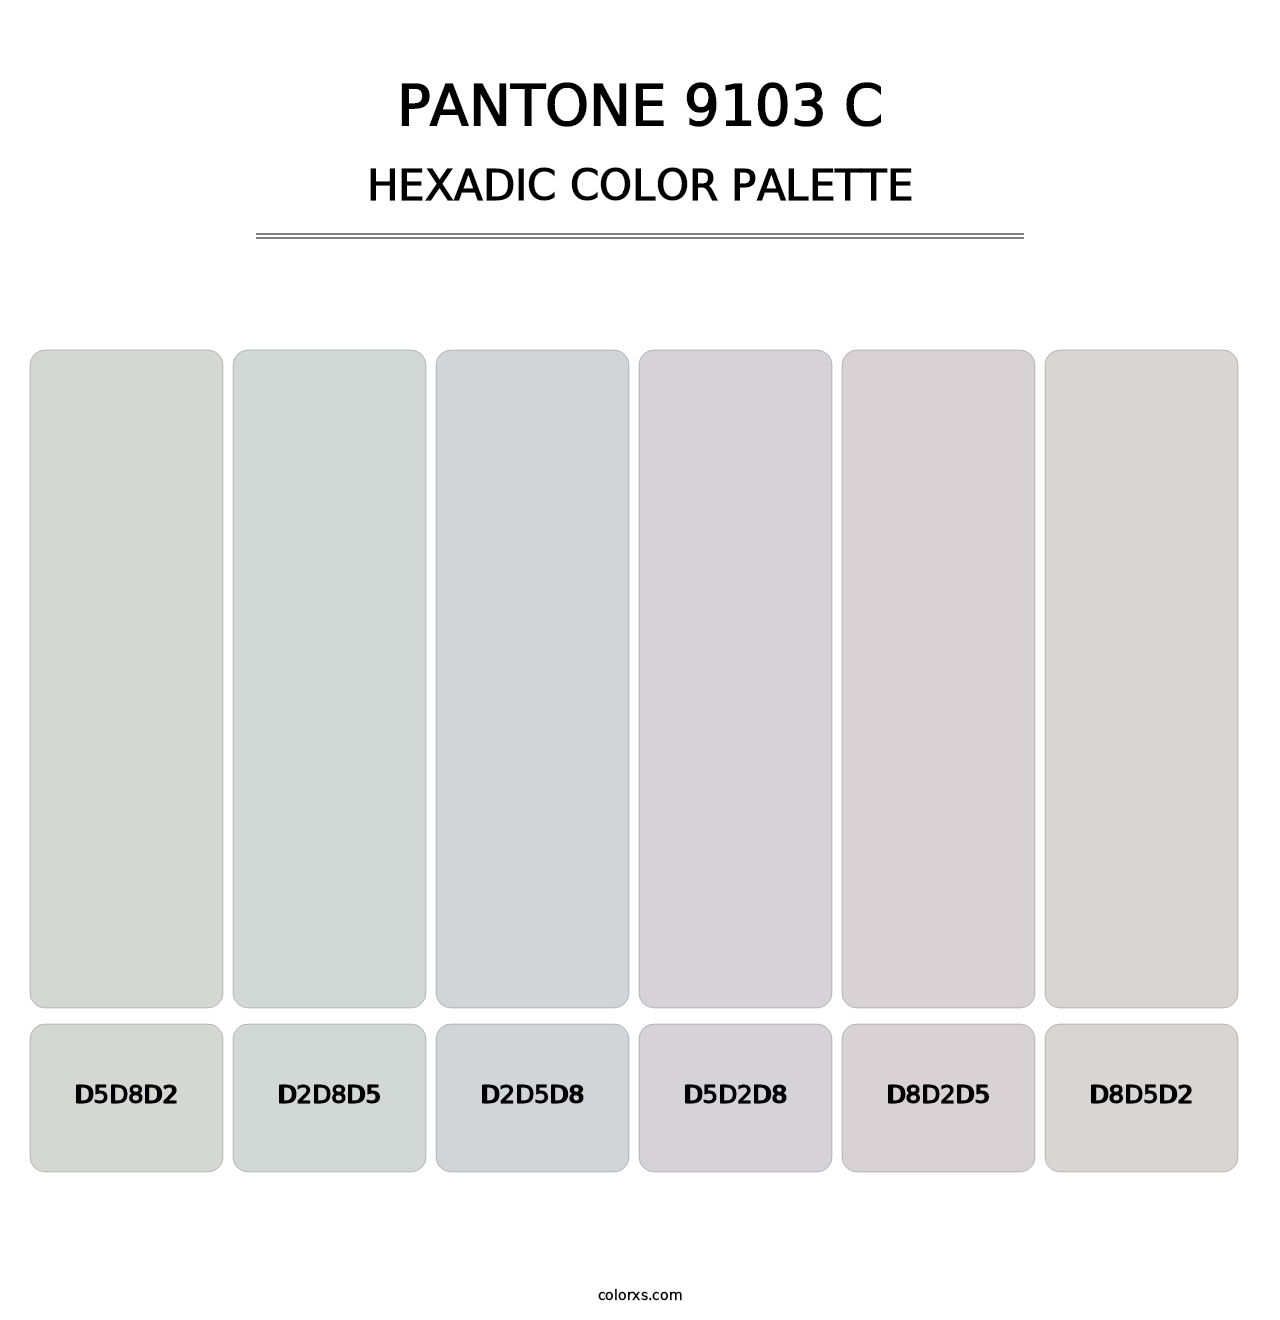 PANTONE 9103 C - Hexadic Color Palette